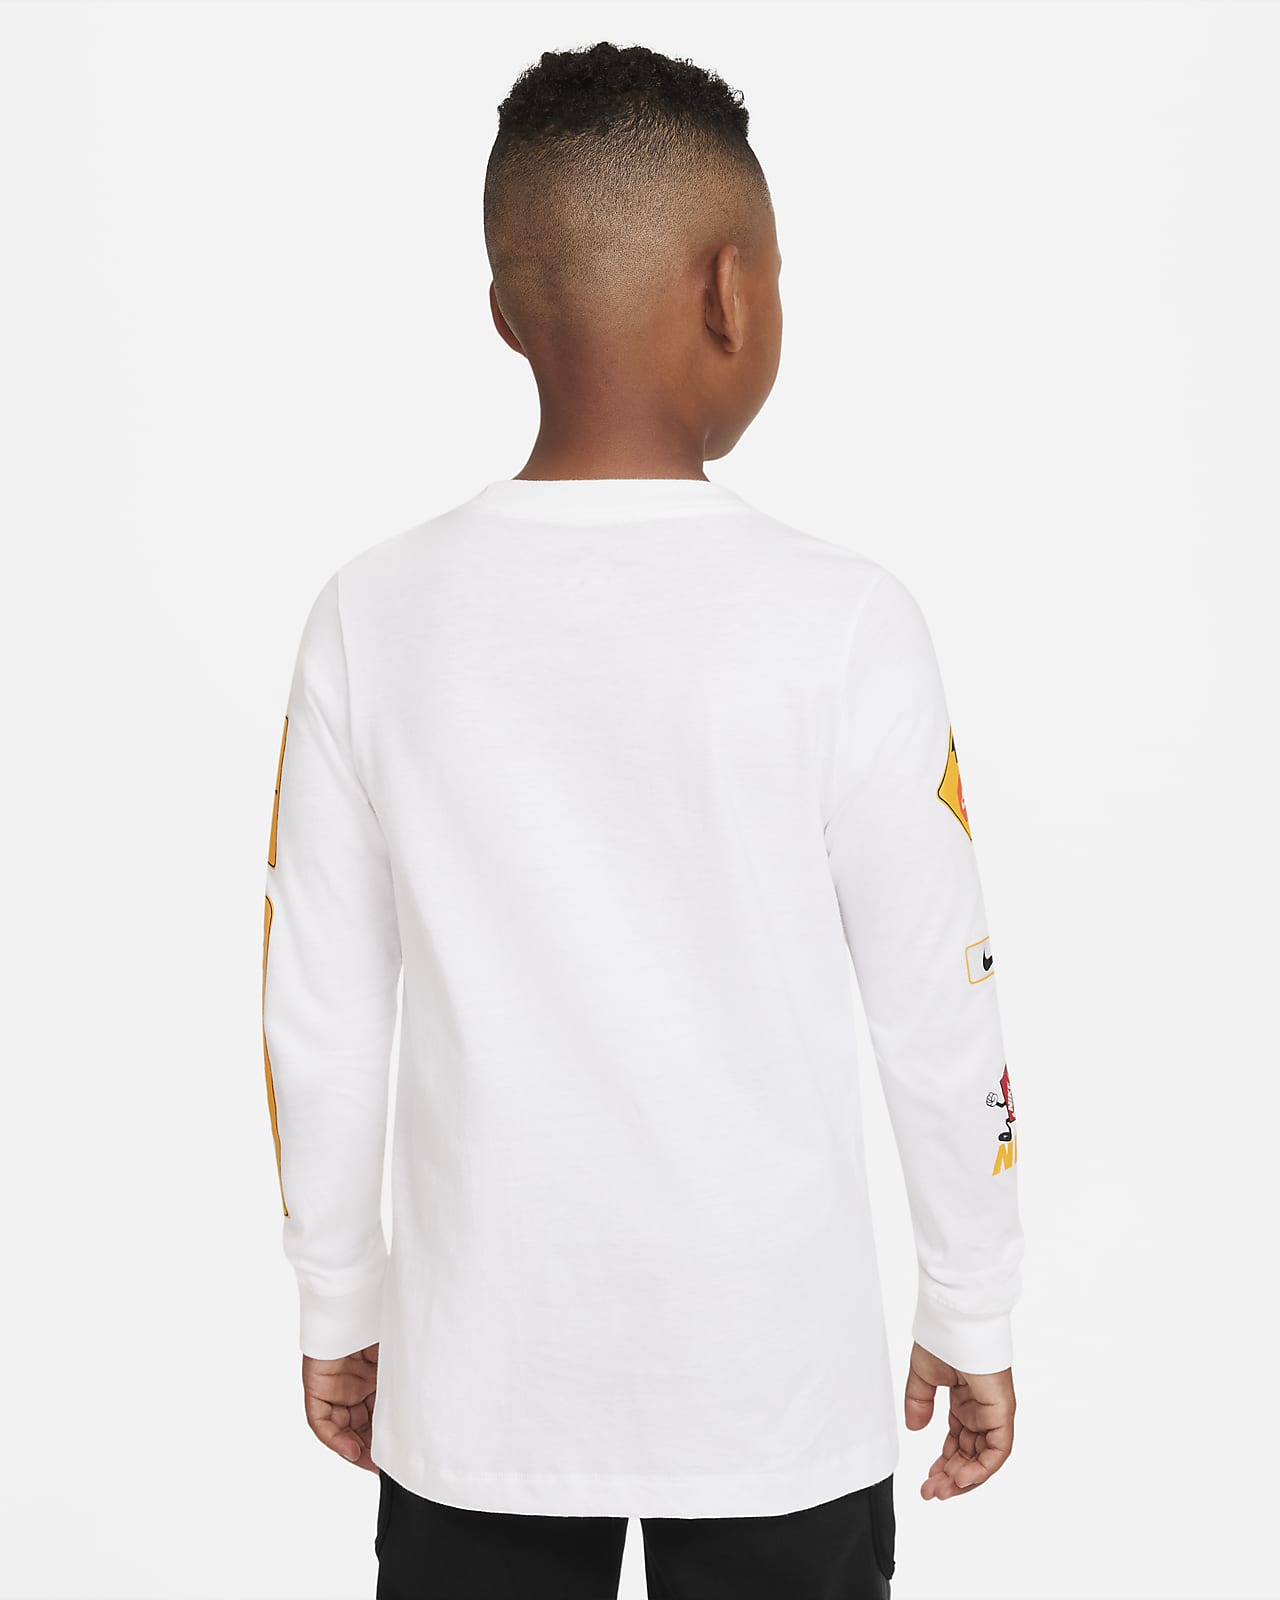 Nike Sportswear Big Kids’ (Boys’) Long-Sleeve T-Shirt